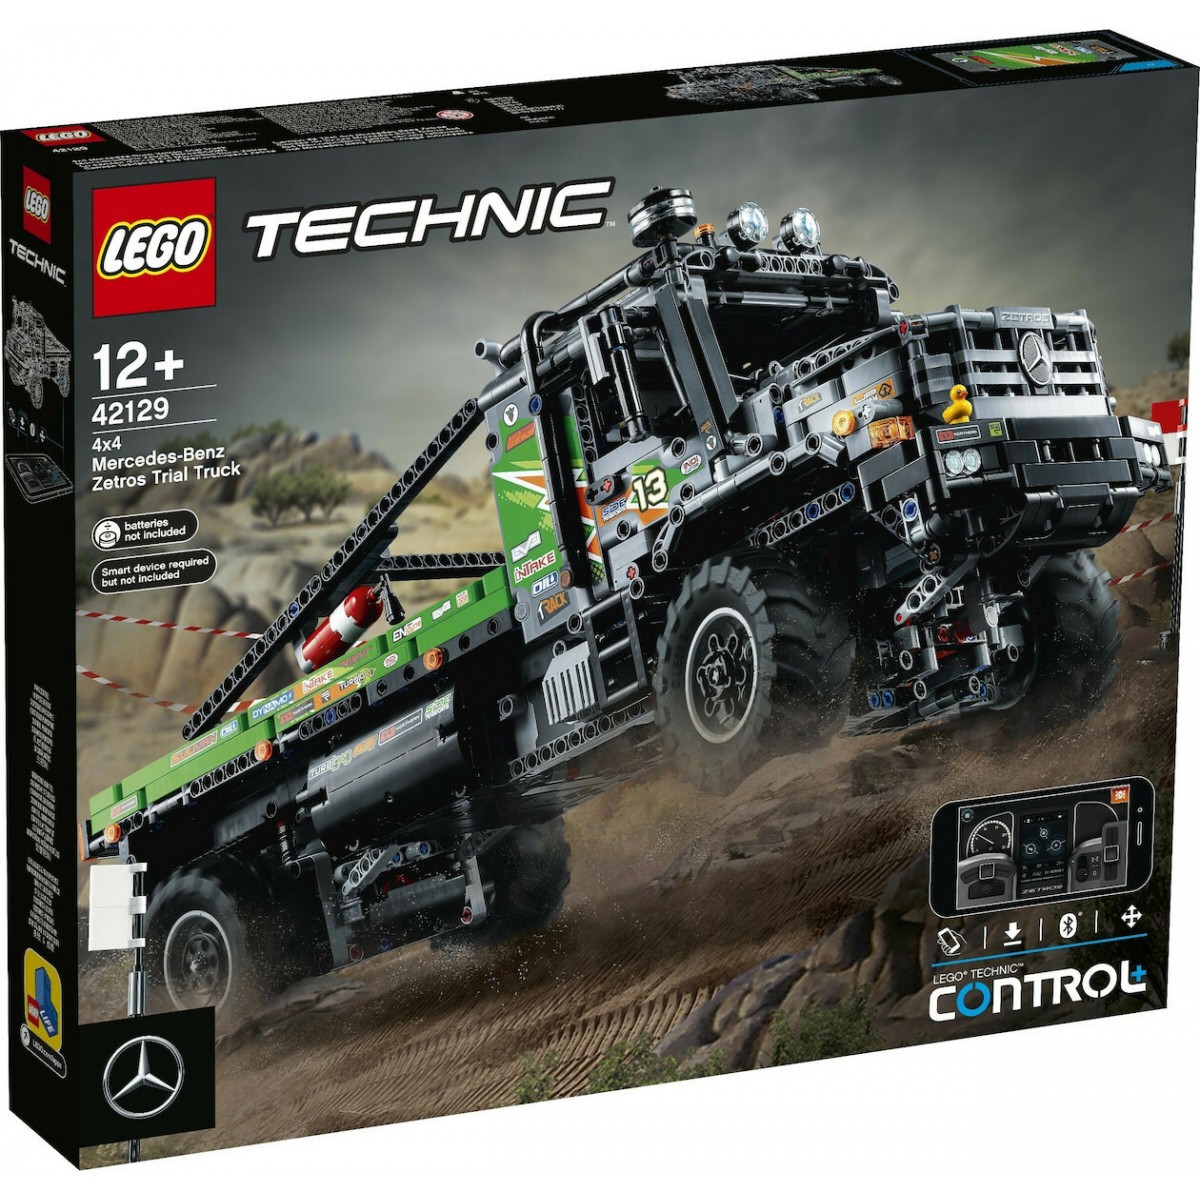 LEGO TECHNIC 42129 4X4 MERCEDES-BENZ ZETROS TRIAL TRUCK